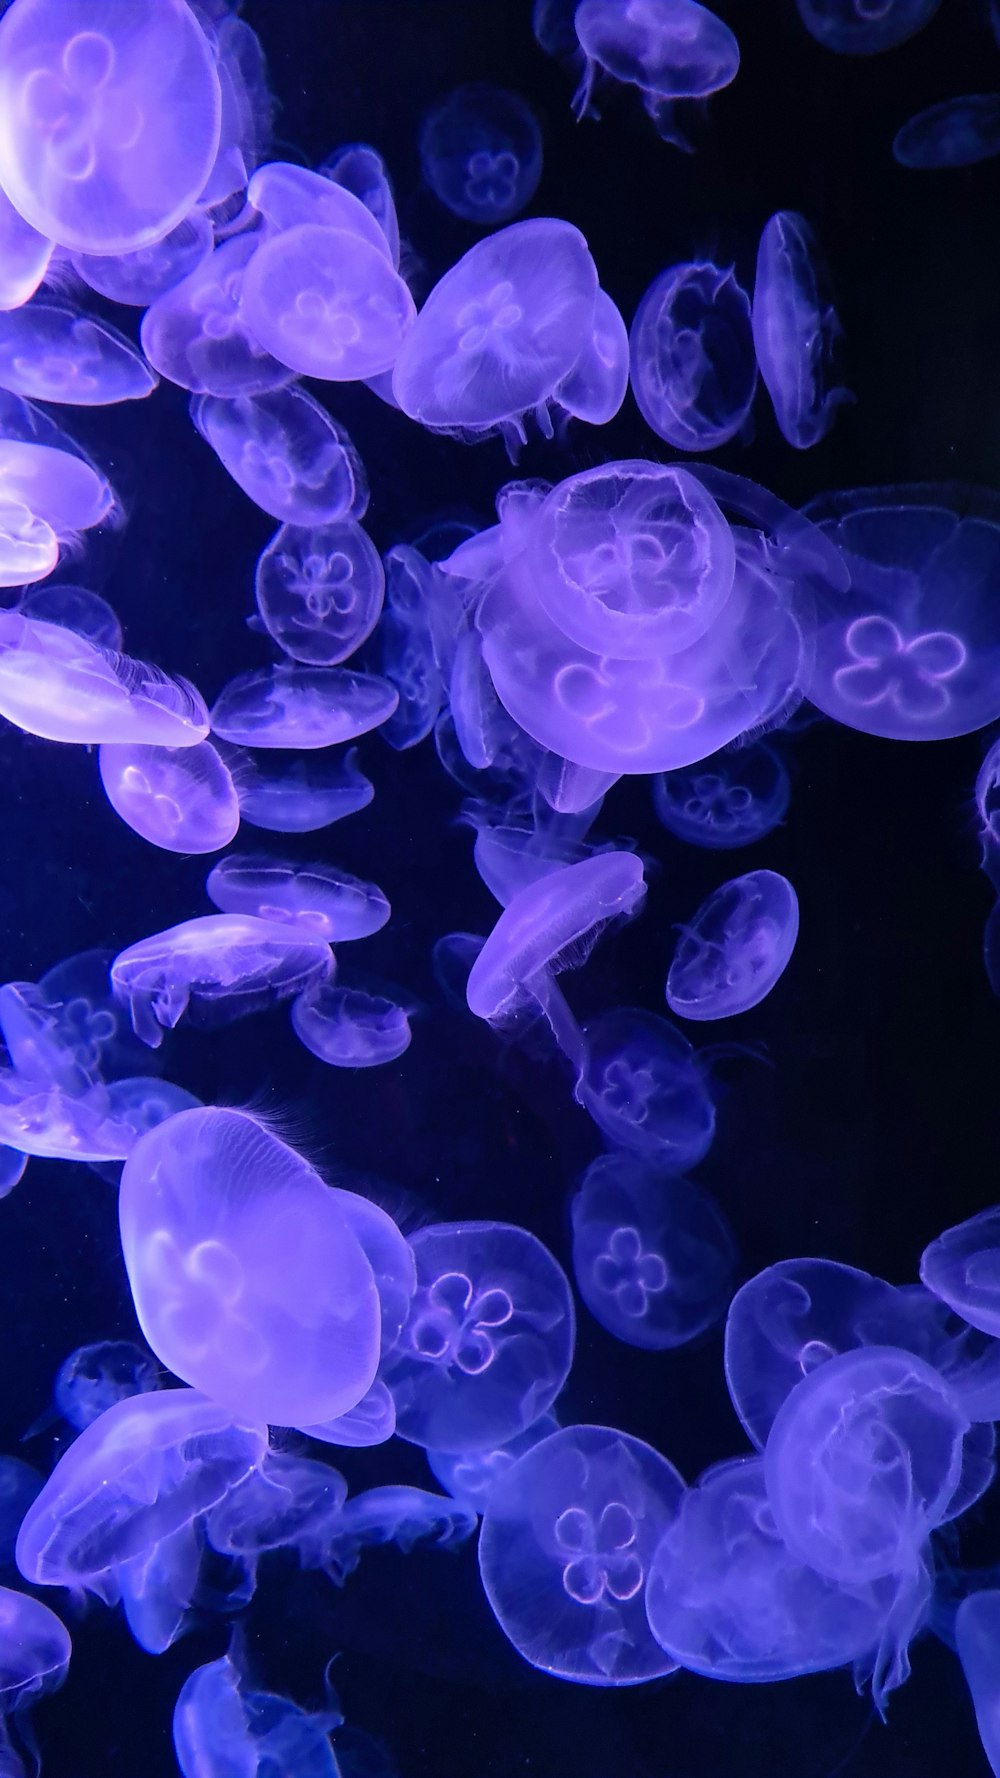 purple jelly fish in water